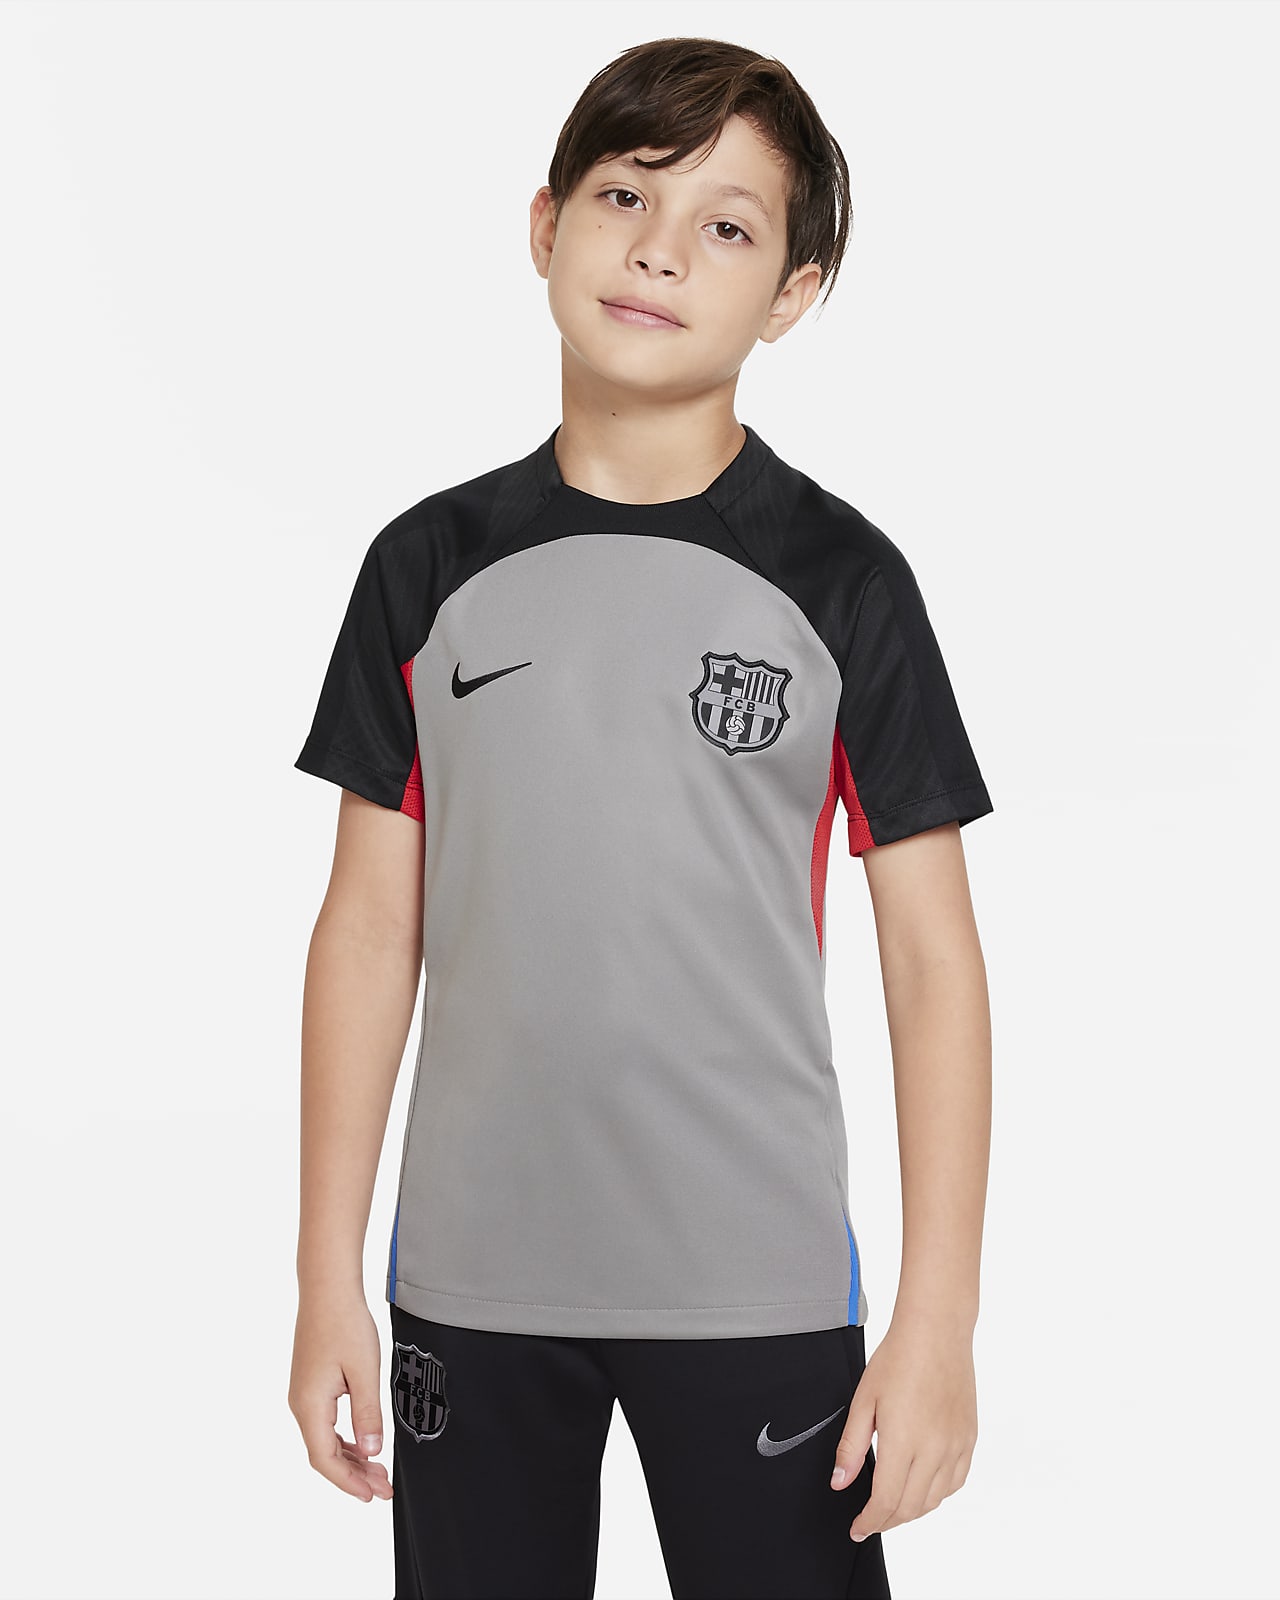 archivo Parpadeo Avispón Strike FC Barcelona Camiseta de fútbol de manga corta Nike Dri-FIT - Niño/a.  Nike ES